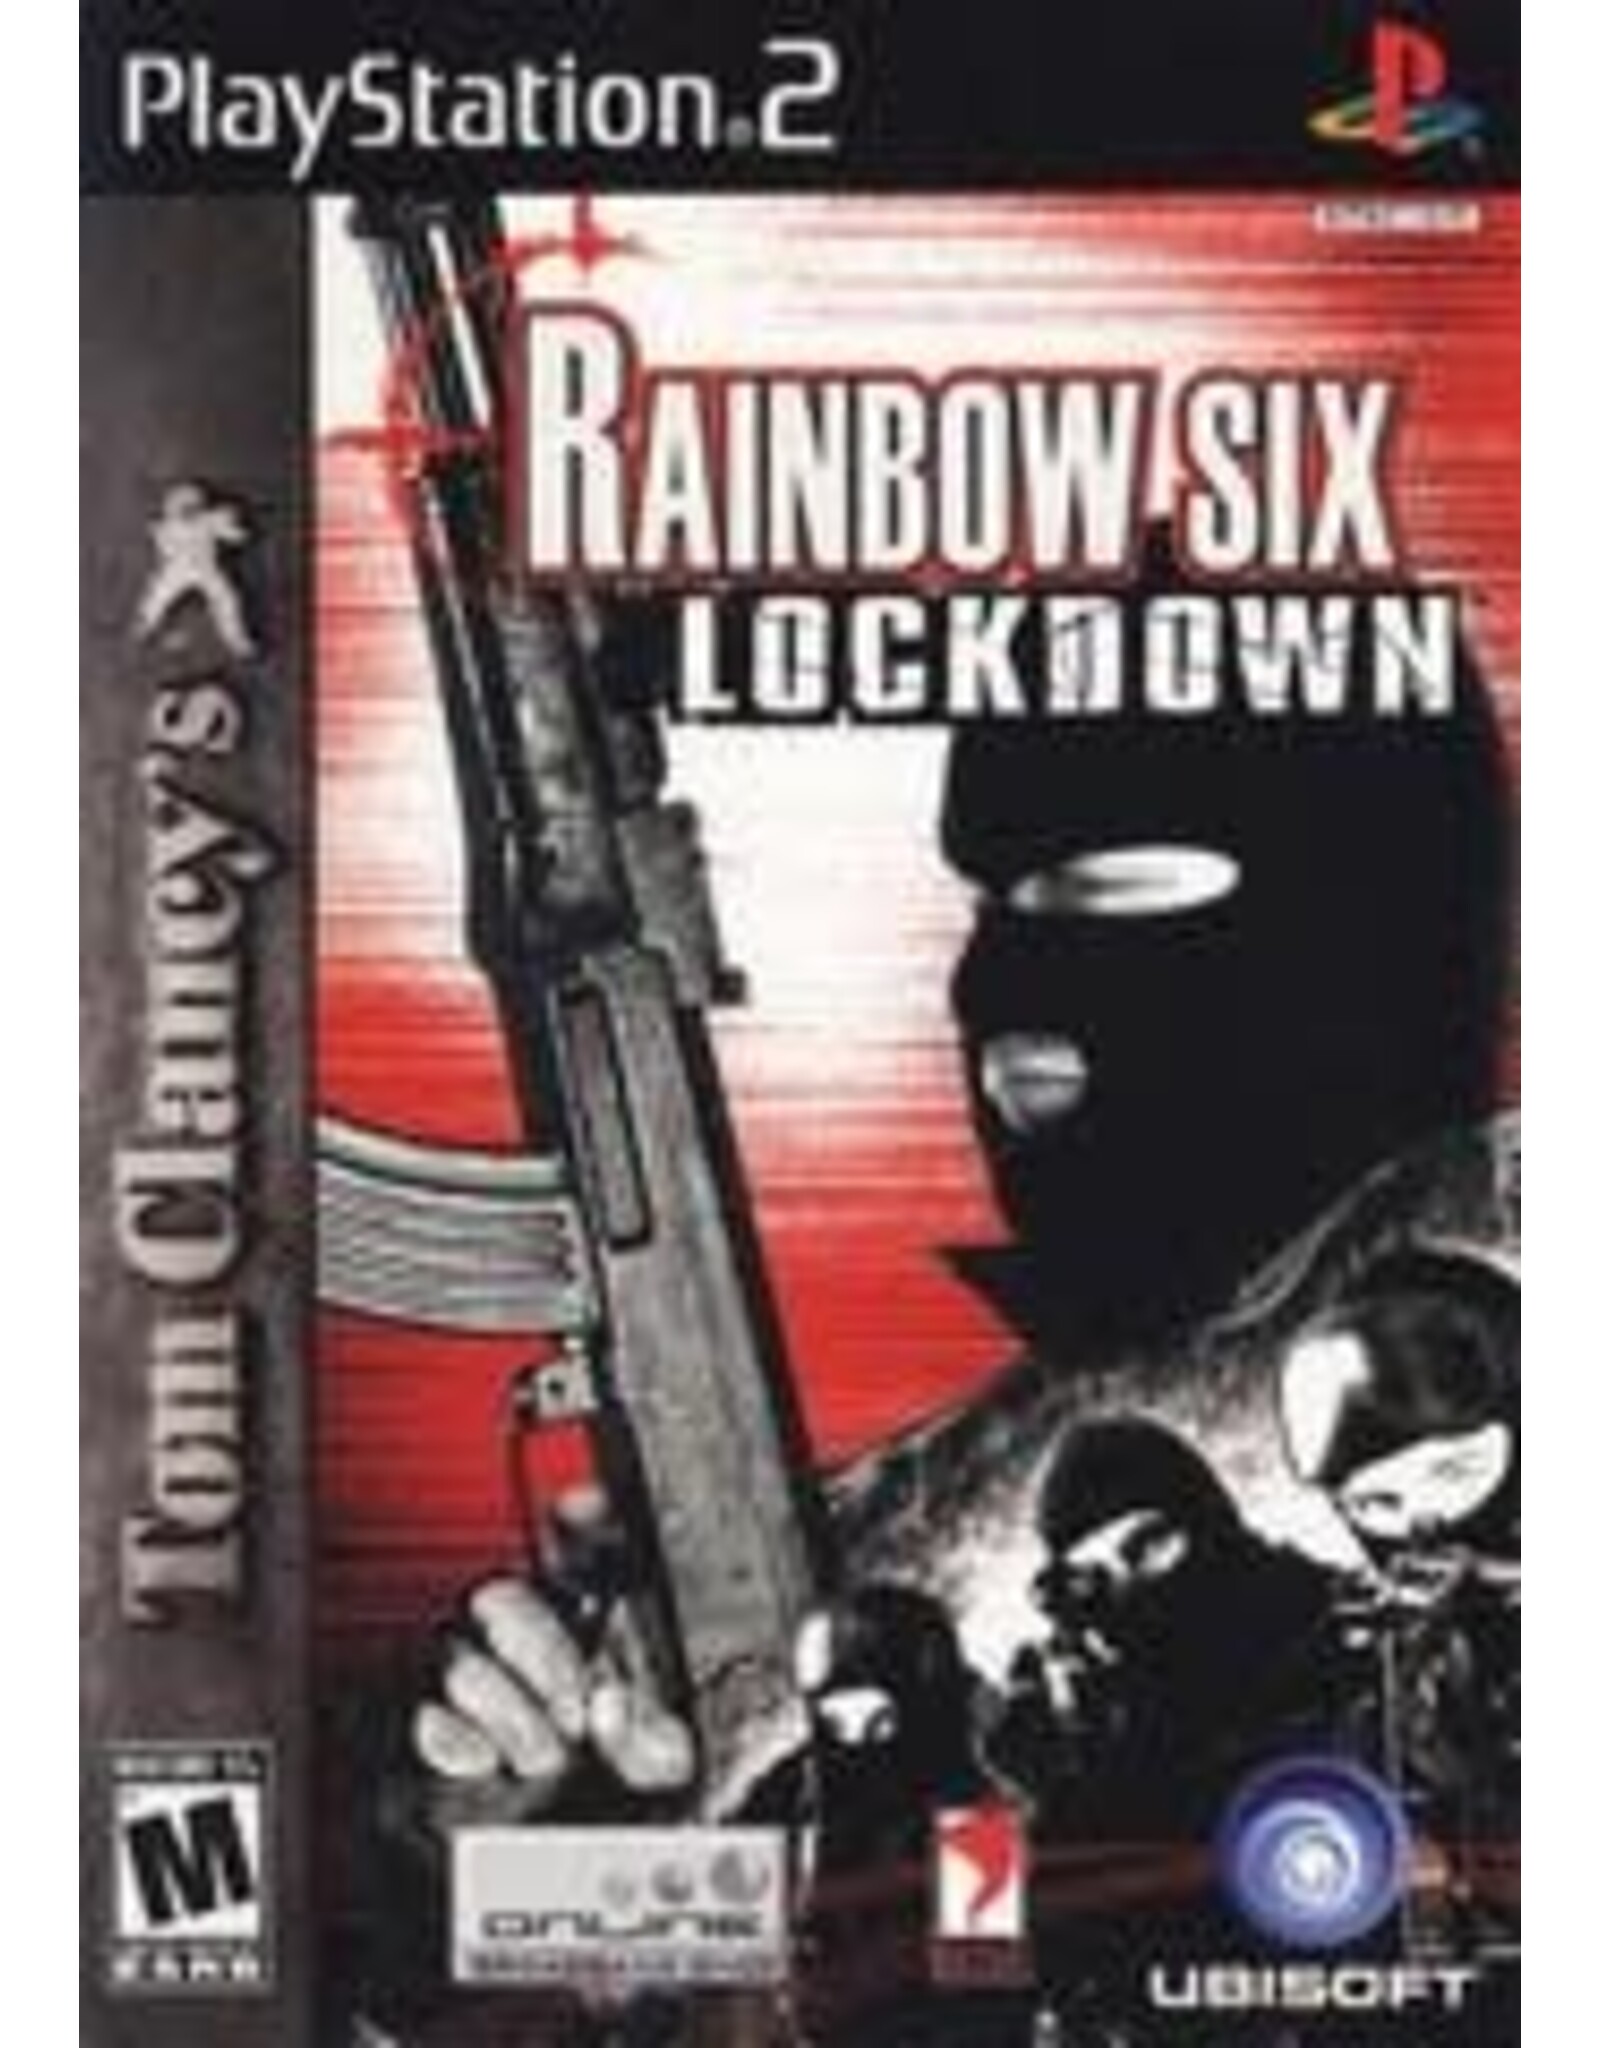 Playstation 2 Rainbow Six Lockdown (No Manual)